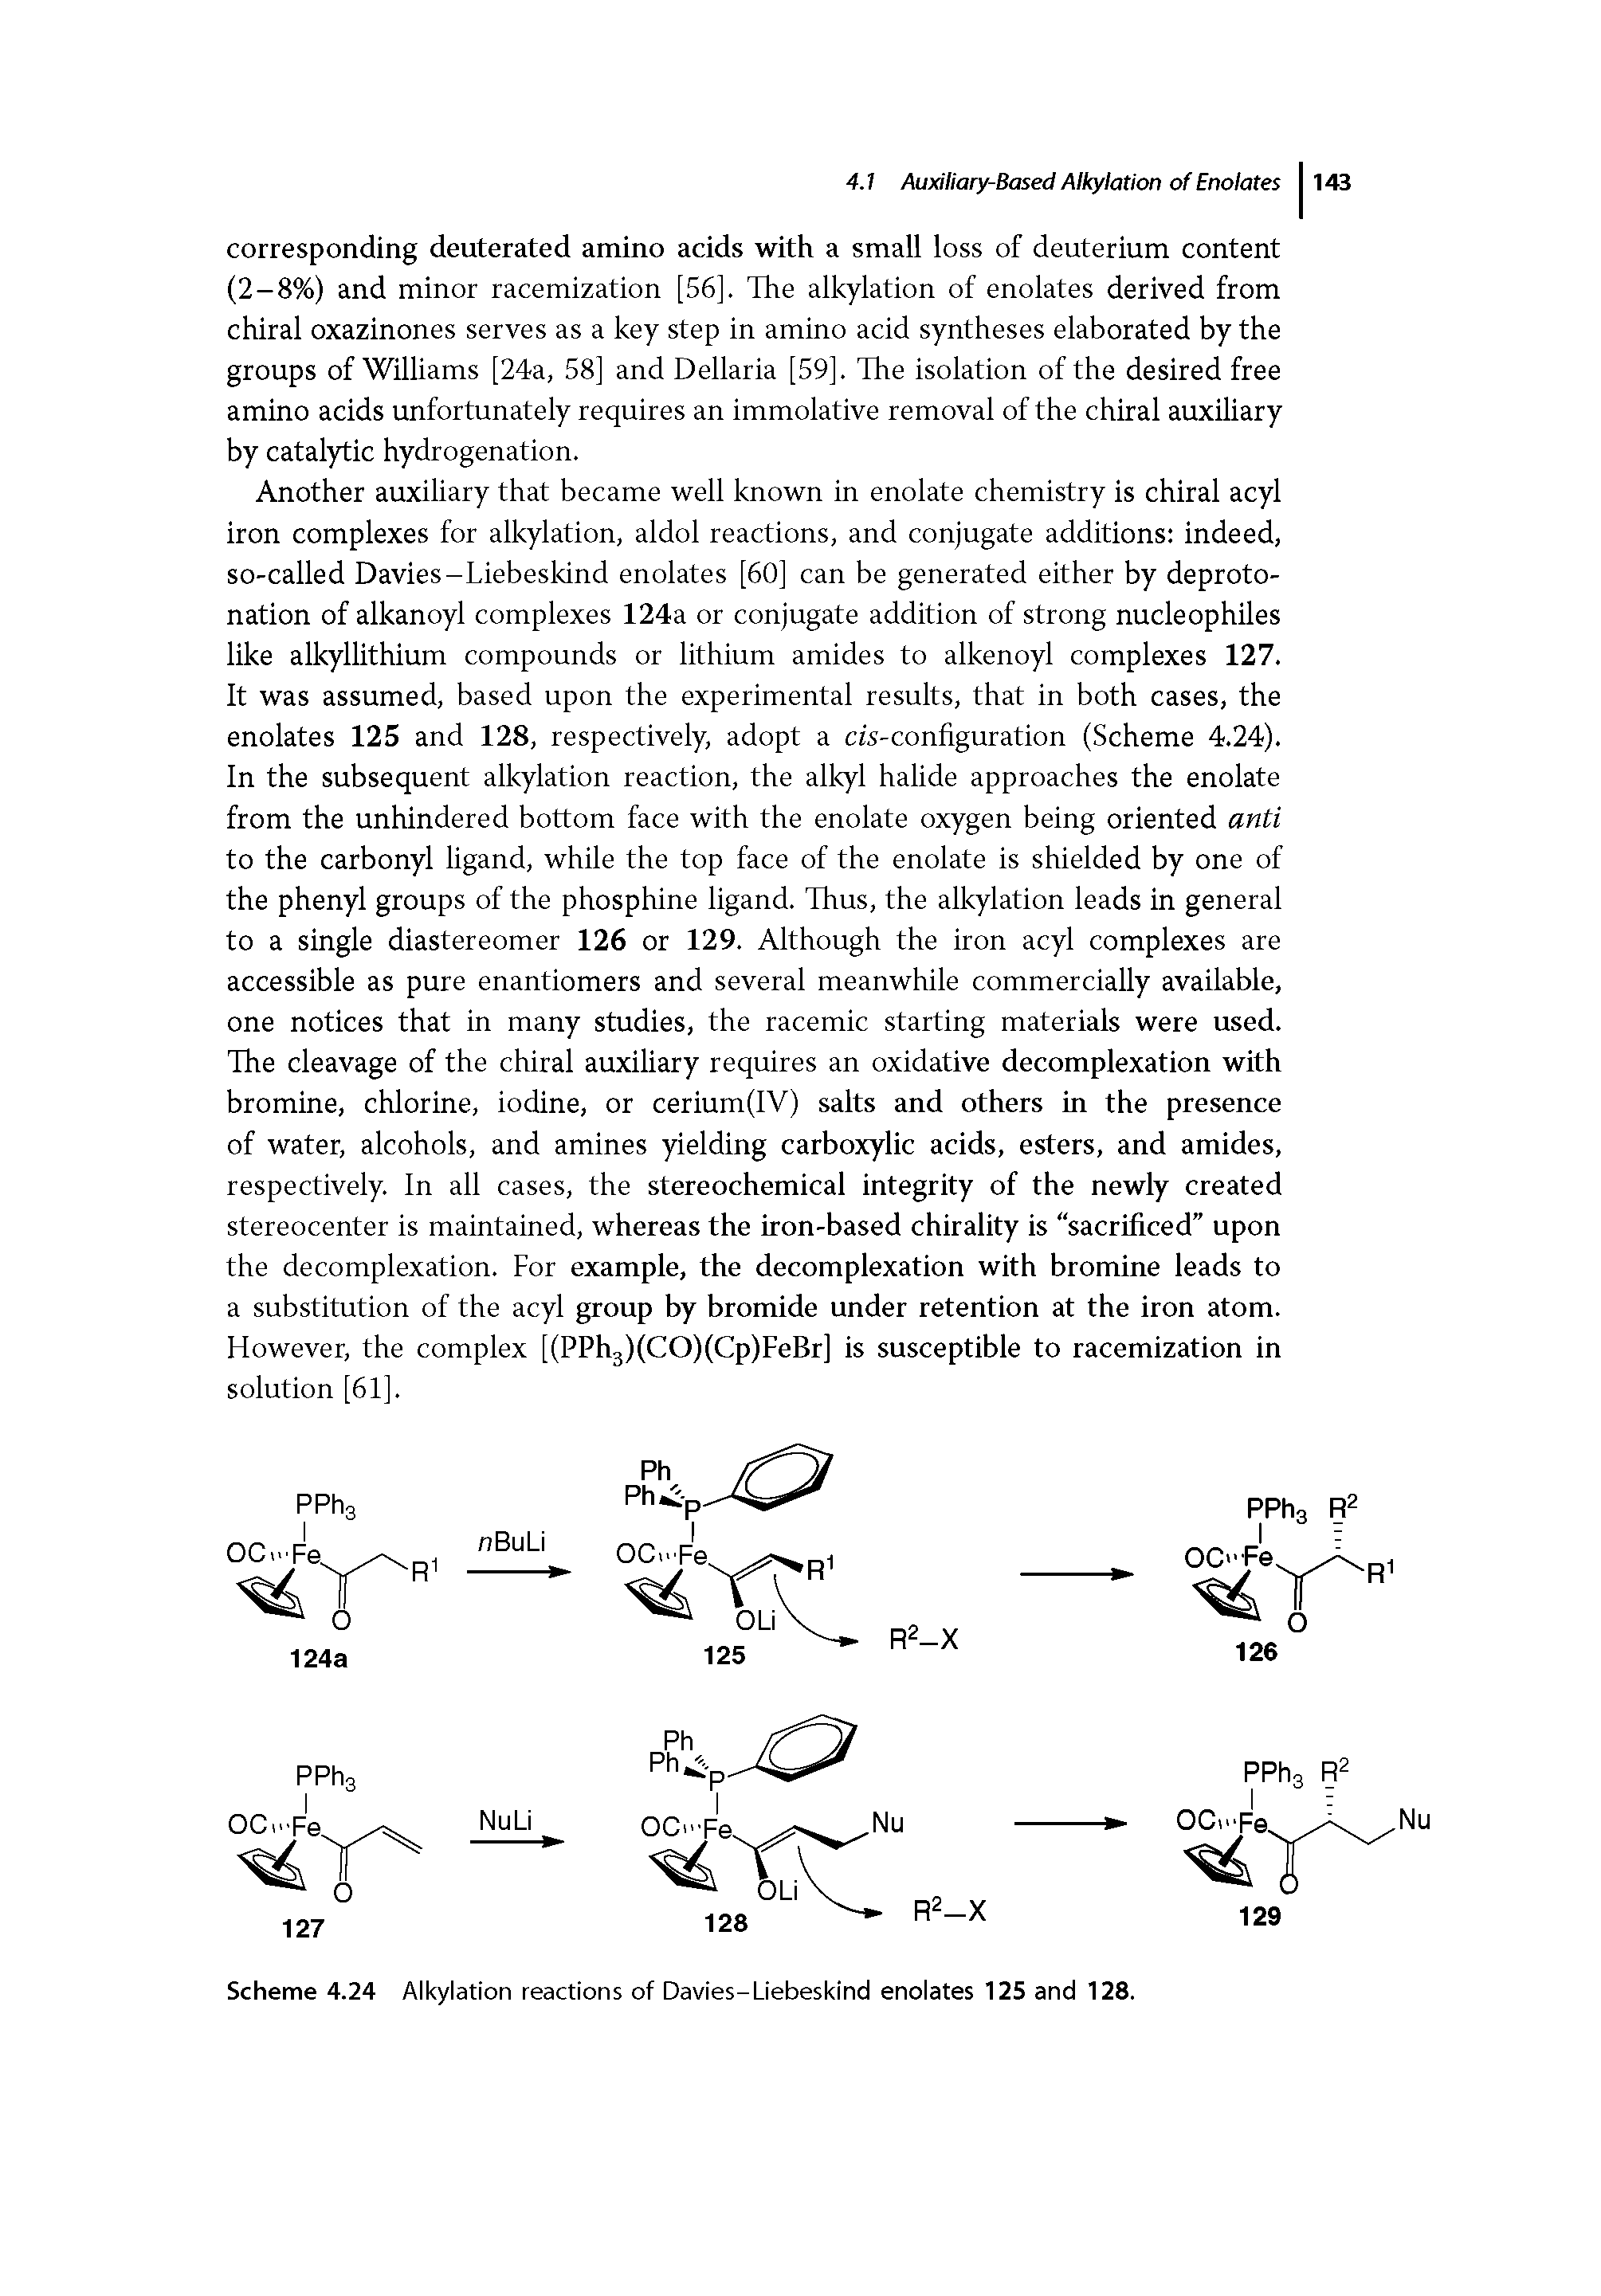 Scheme 4.24 Alkylation reactions of Davies-Liebeskind enolates 125 and 128.